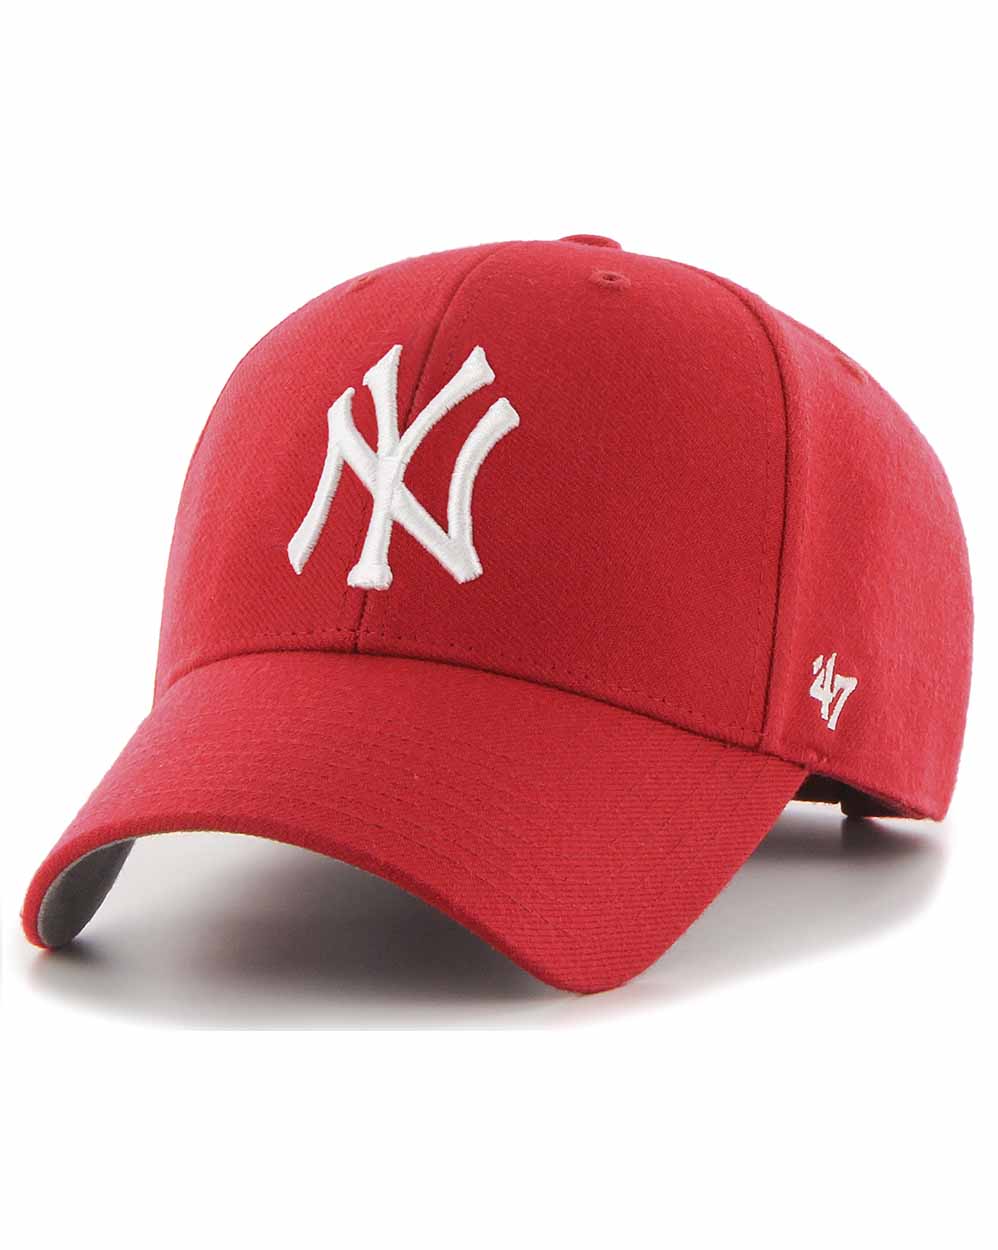 Бейсболка классическая с изогнутым козырьком '47 Brand MVP New York Yankees RD Red отзывы